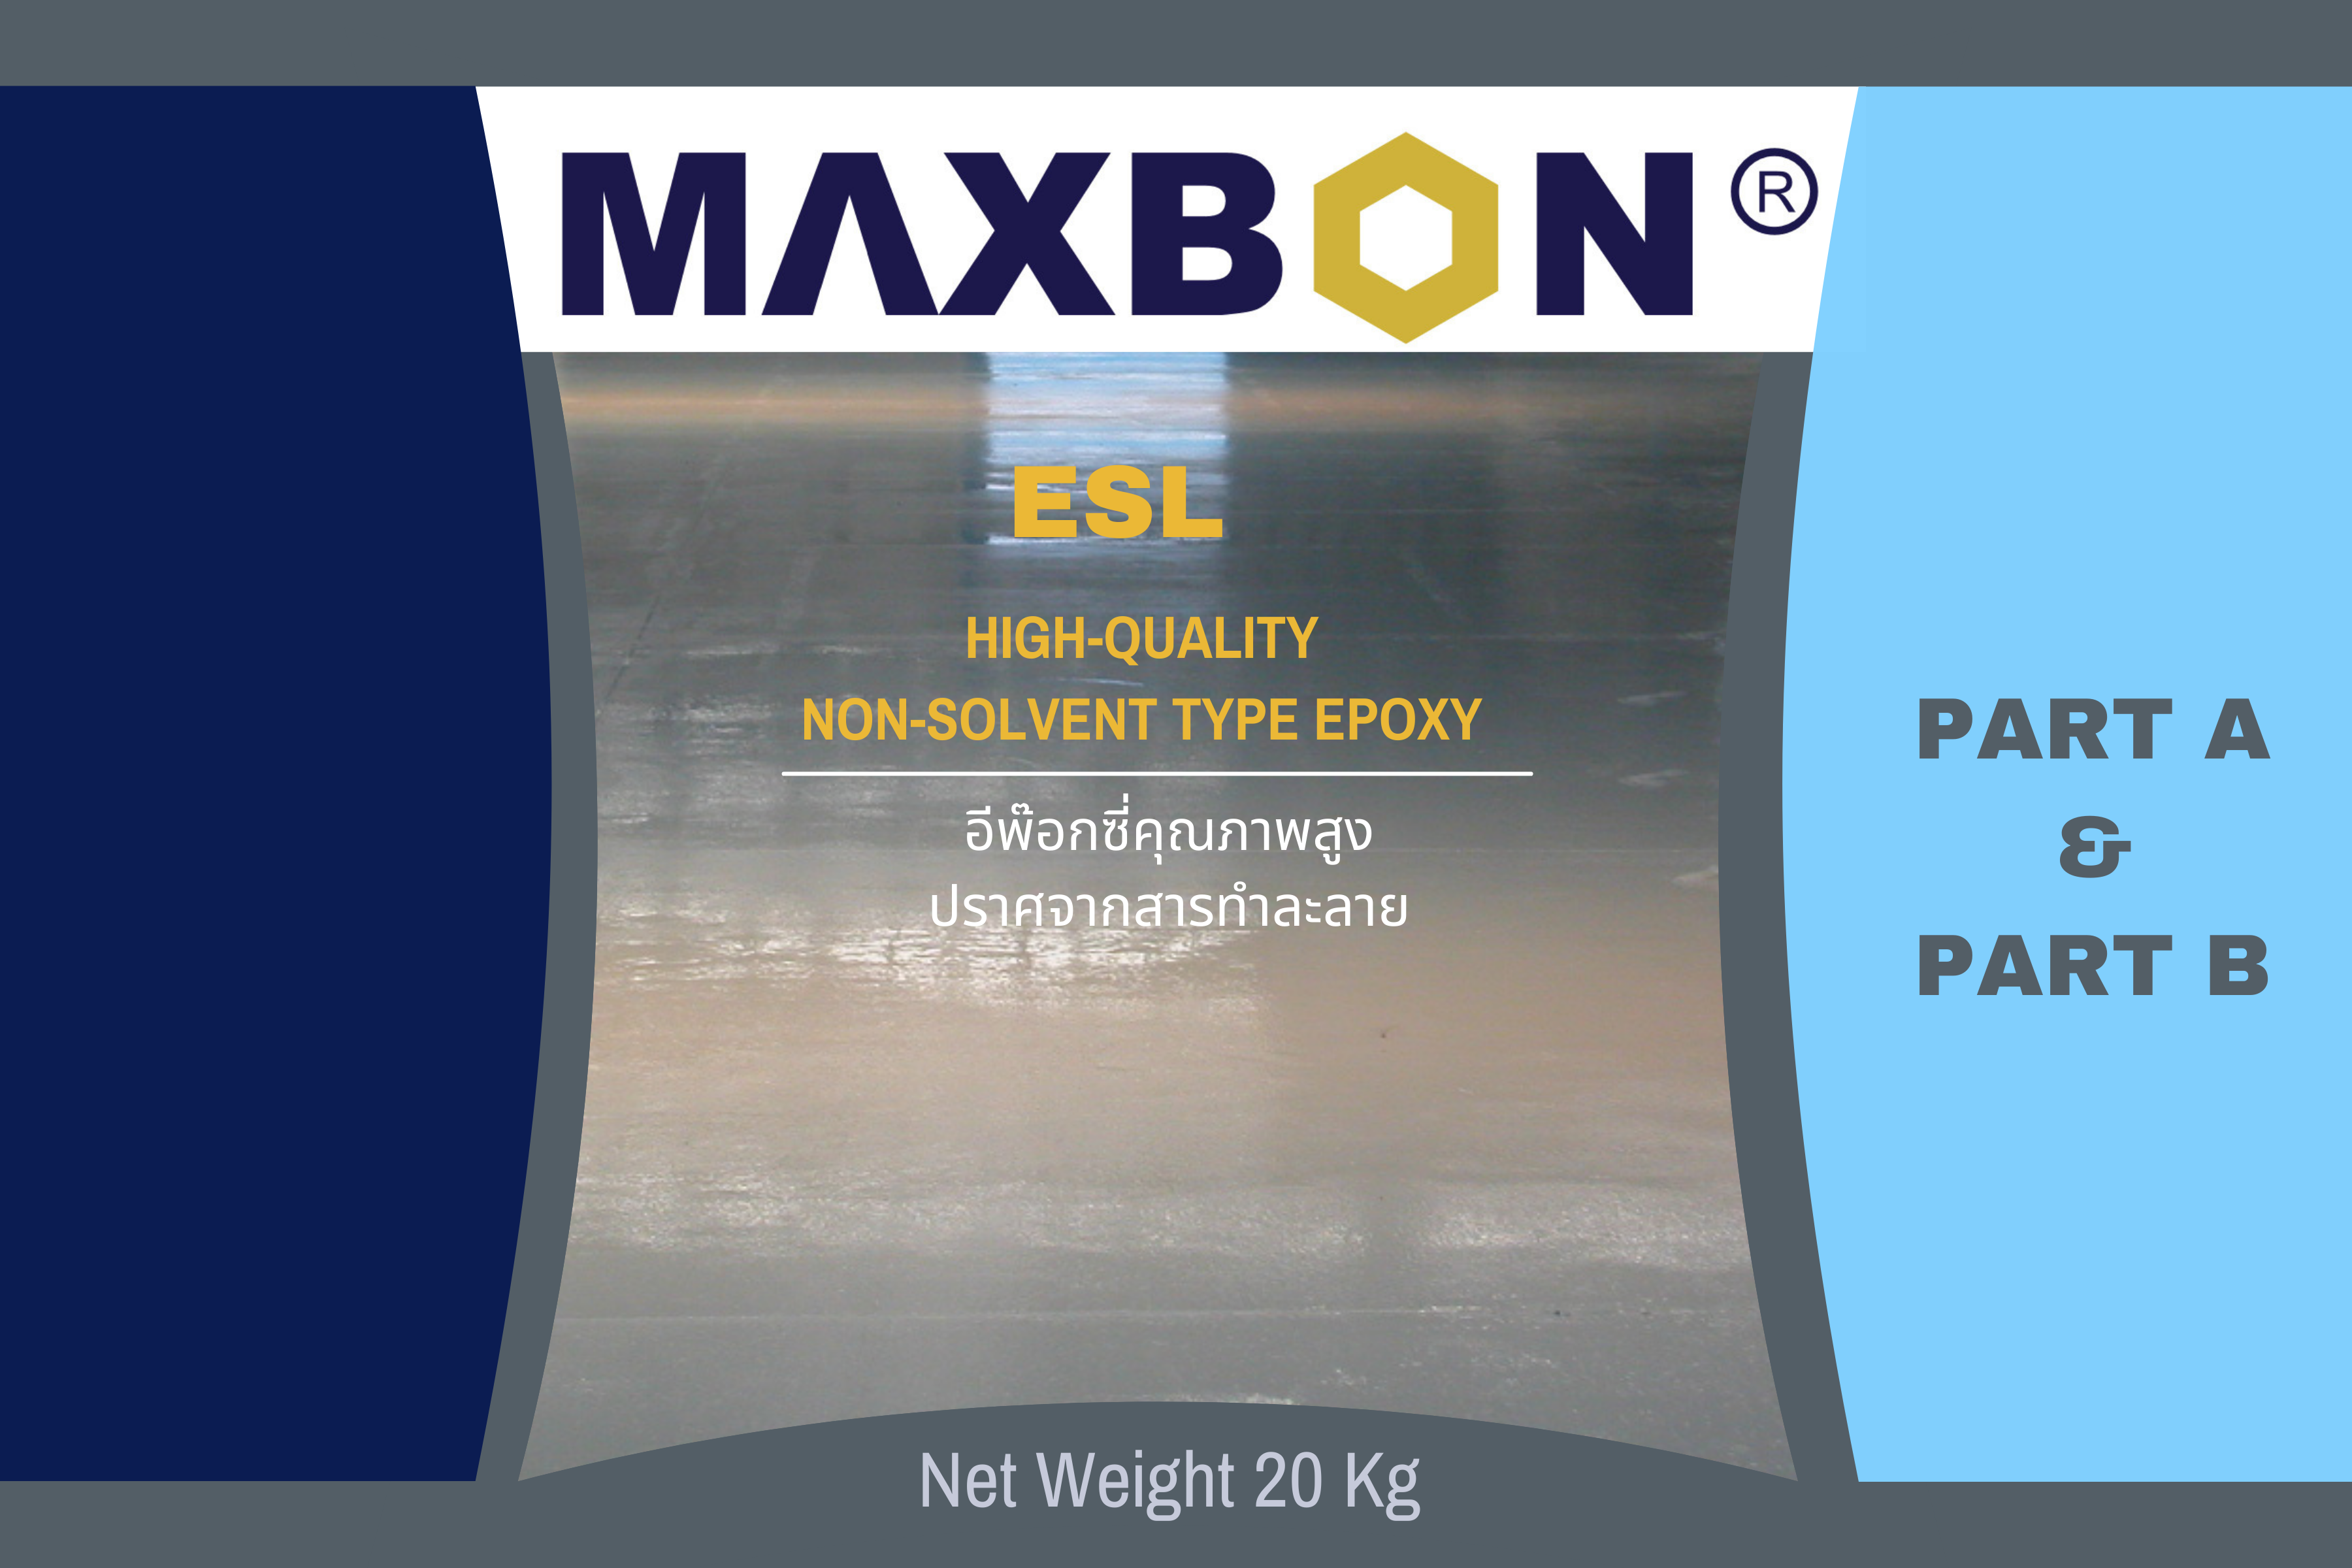 MAXBON® ESL (Epoxy)